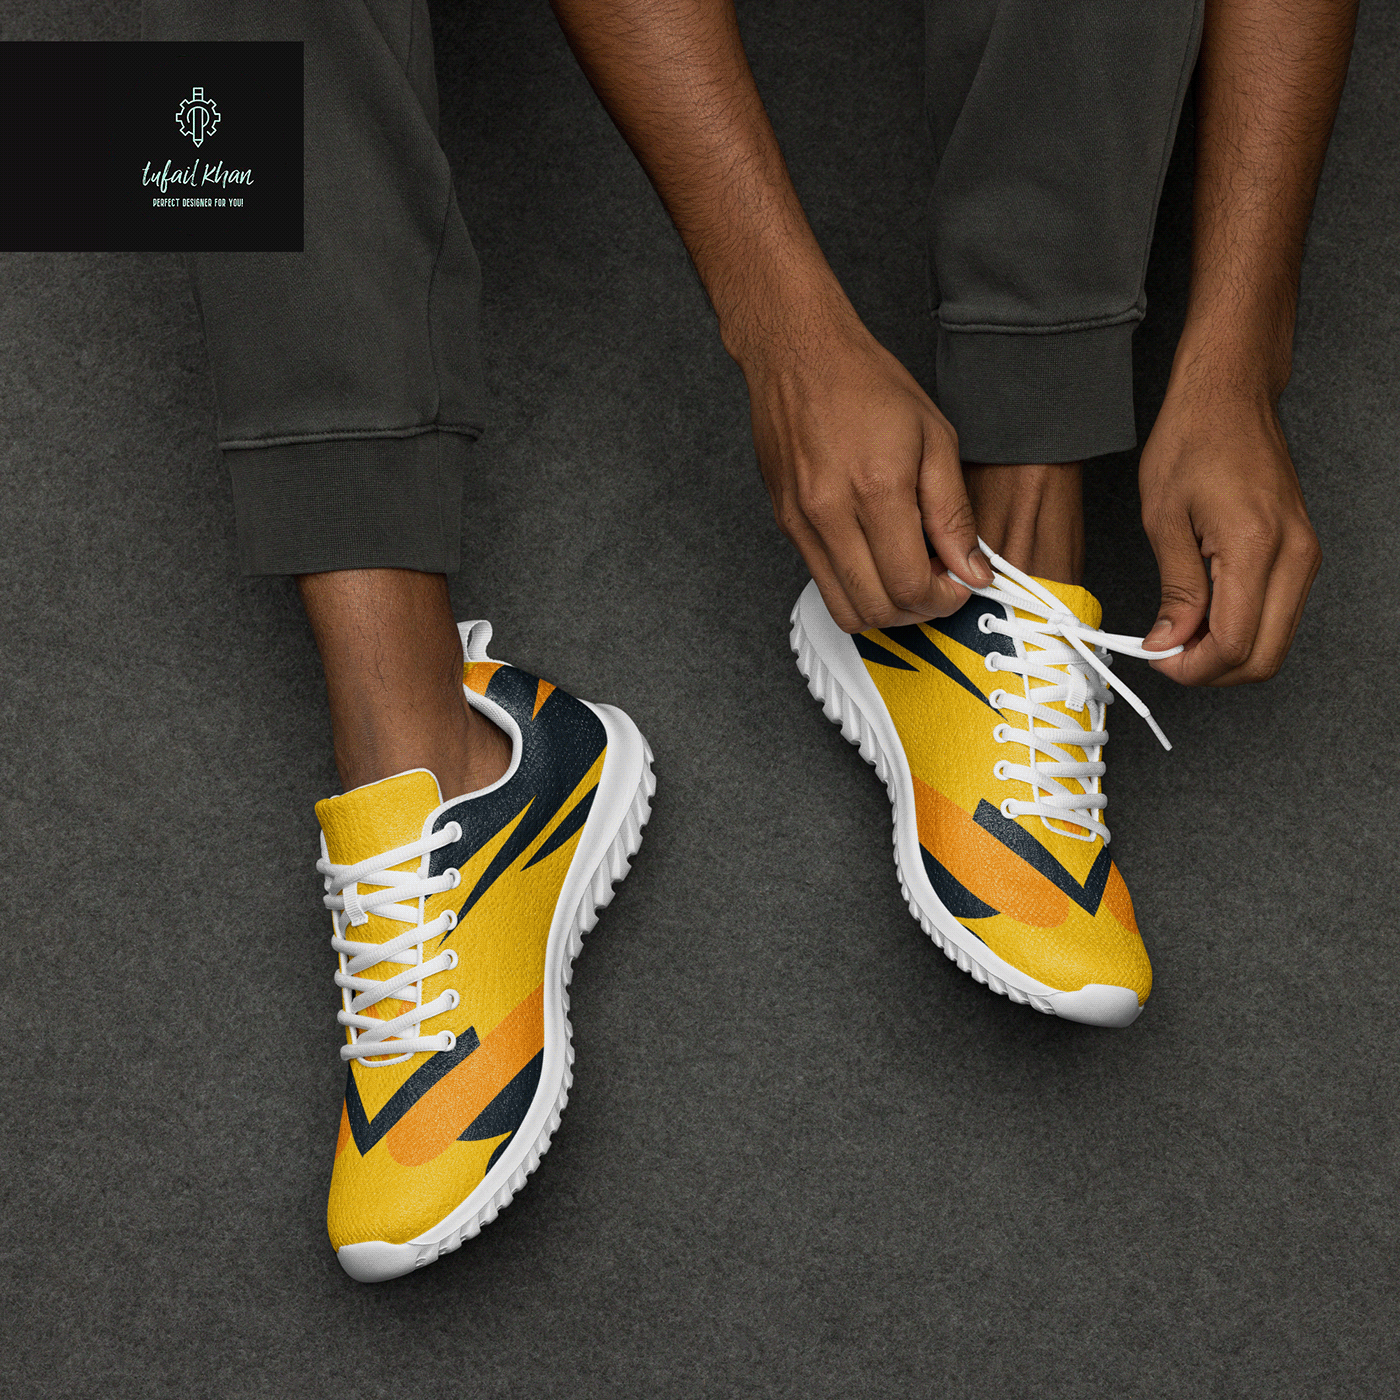 yellow, orange and black men's athletic shoes design.